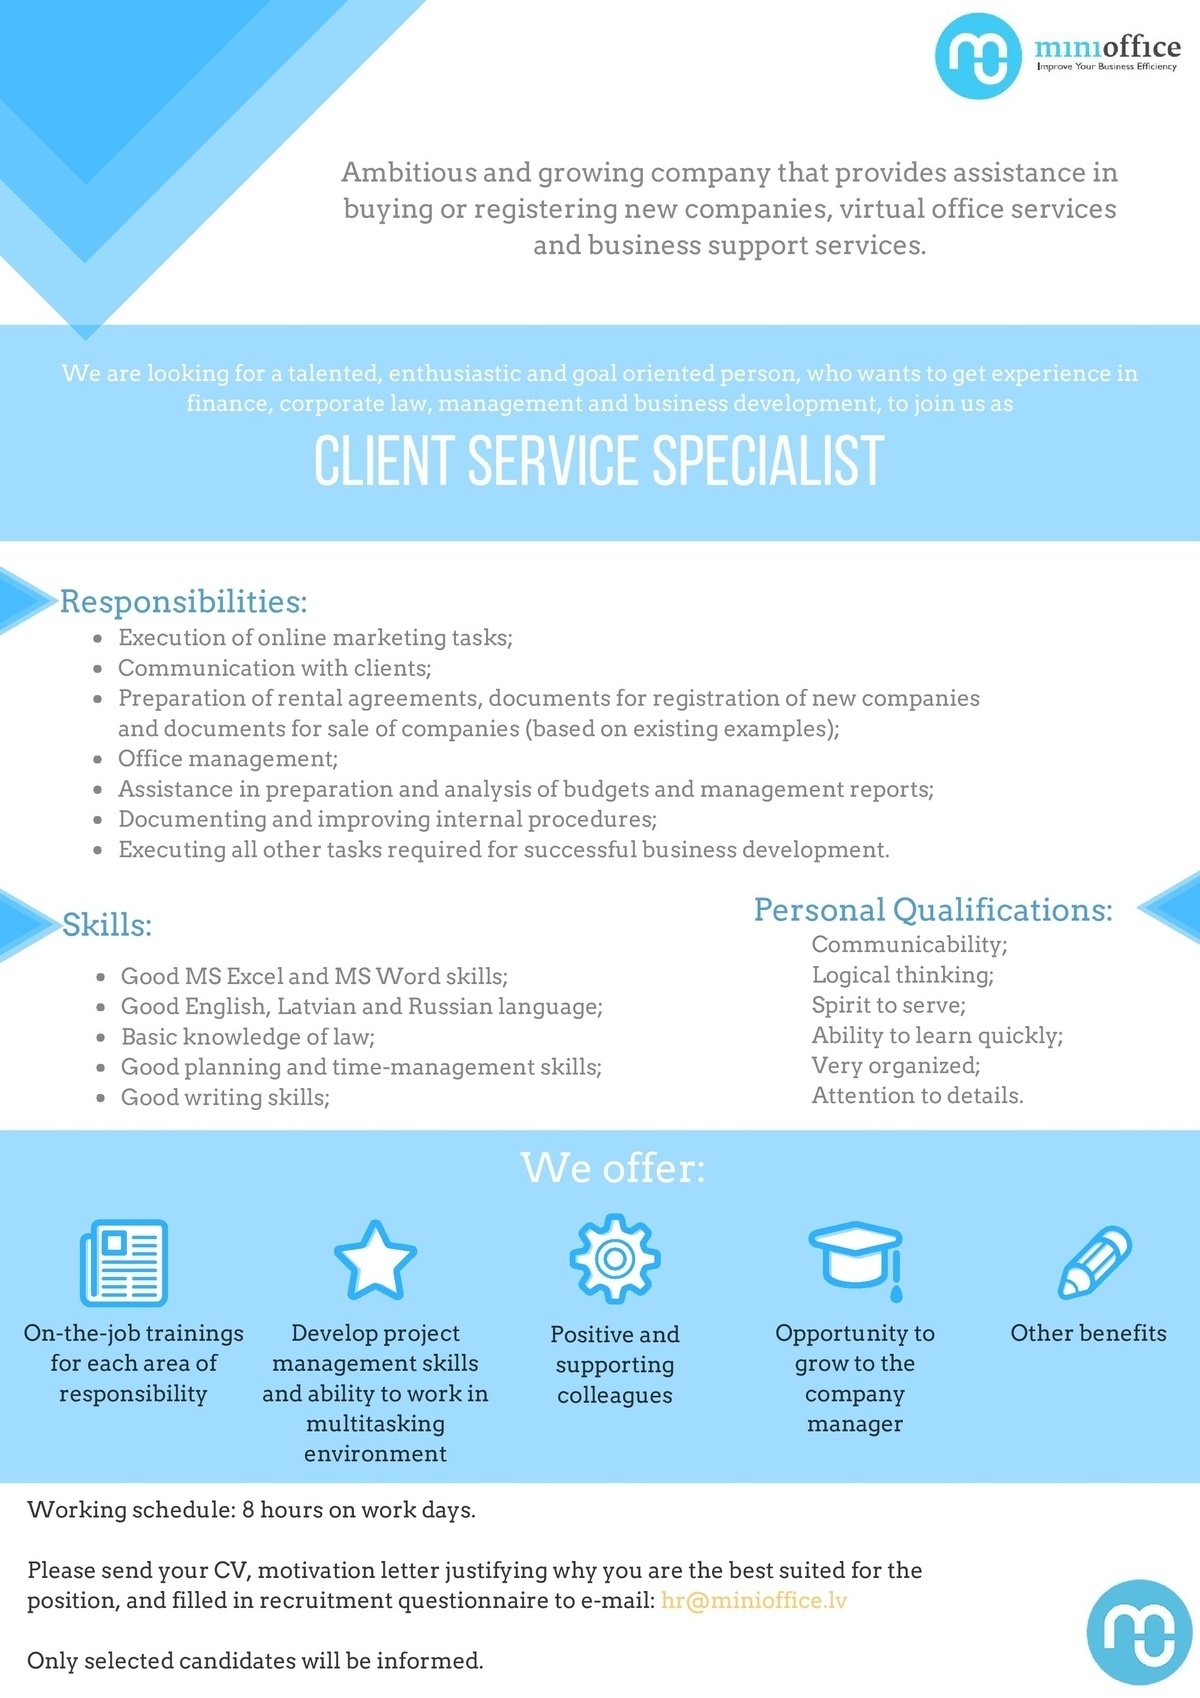 SIA "Mini Office" Client Service Specialist